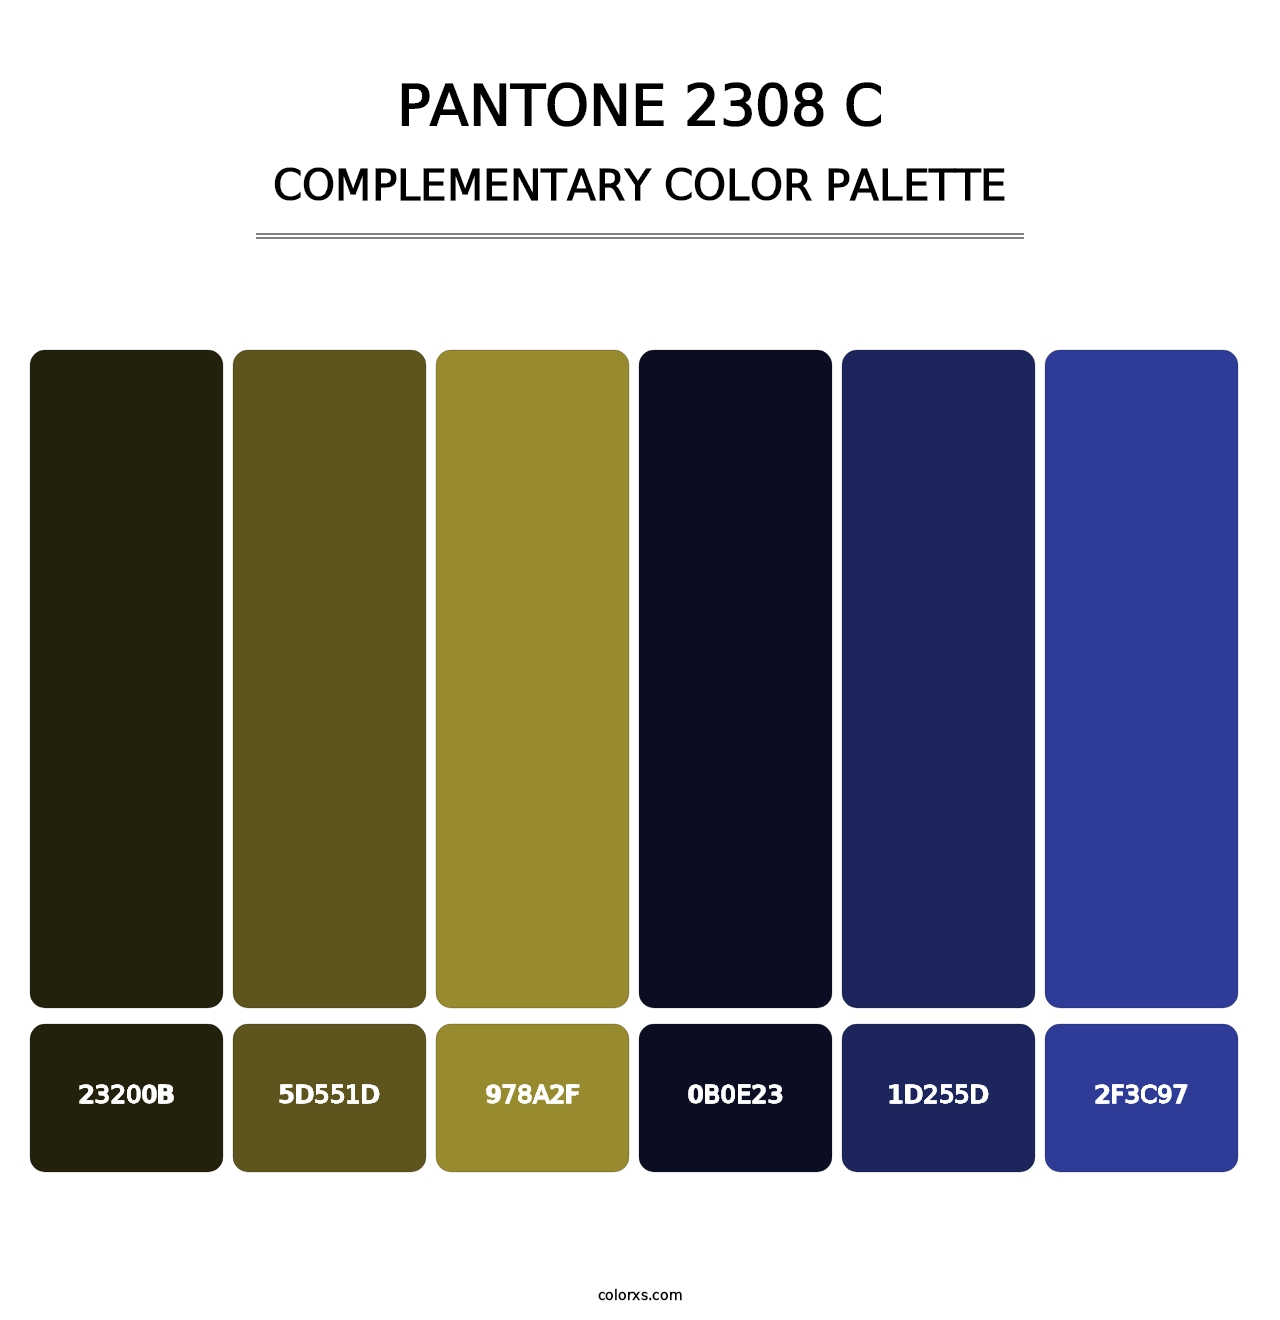 PANTONE 2308 C - Complementary Color Palette